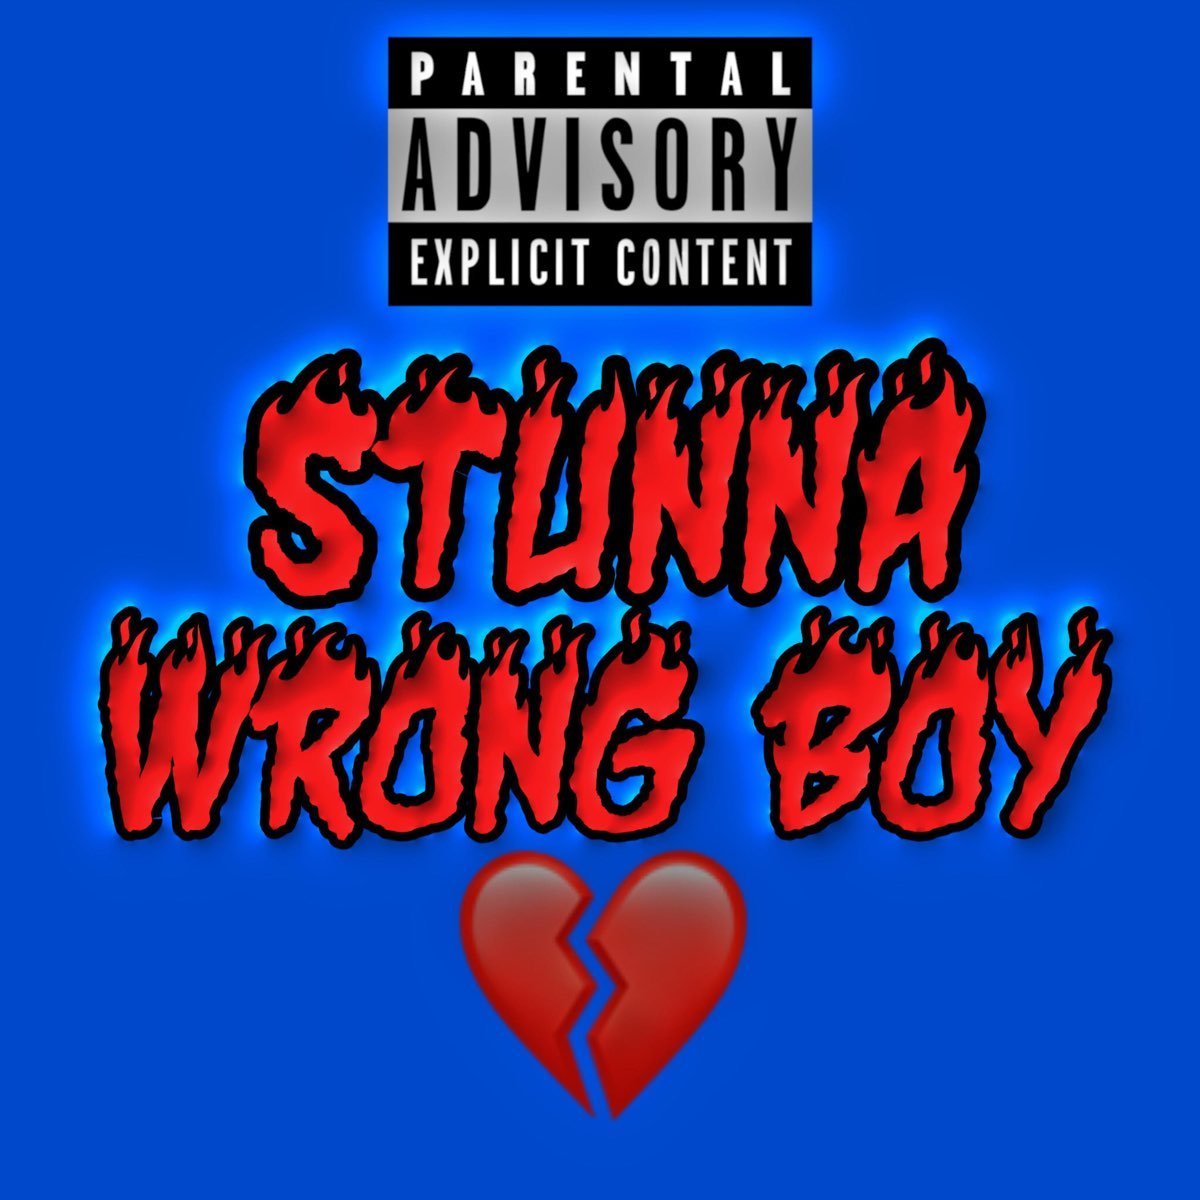 Young Stunna – Wrong Boy mp3 download free lyrics